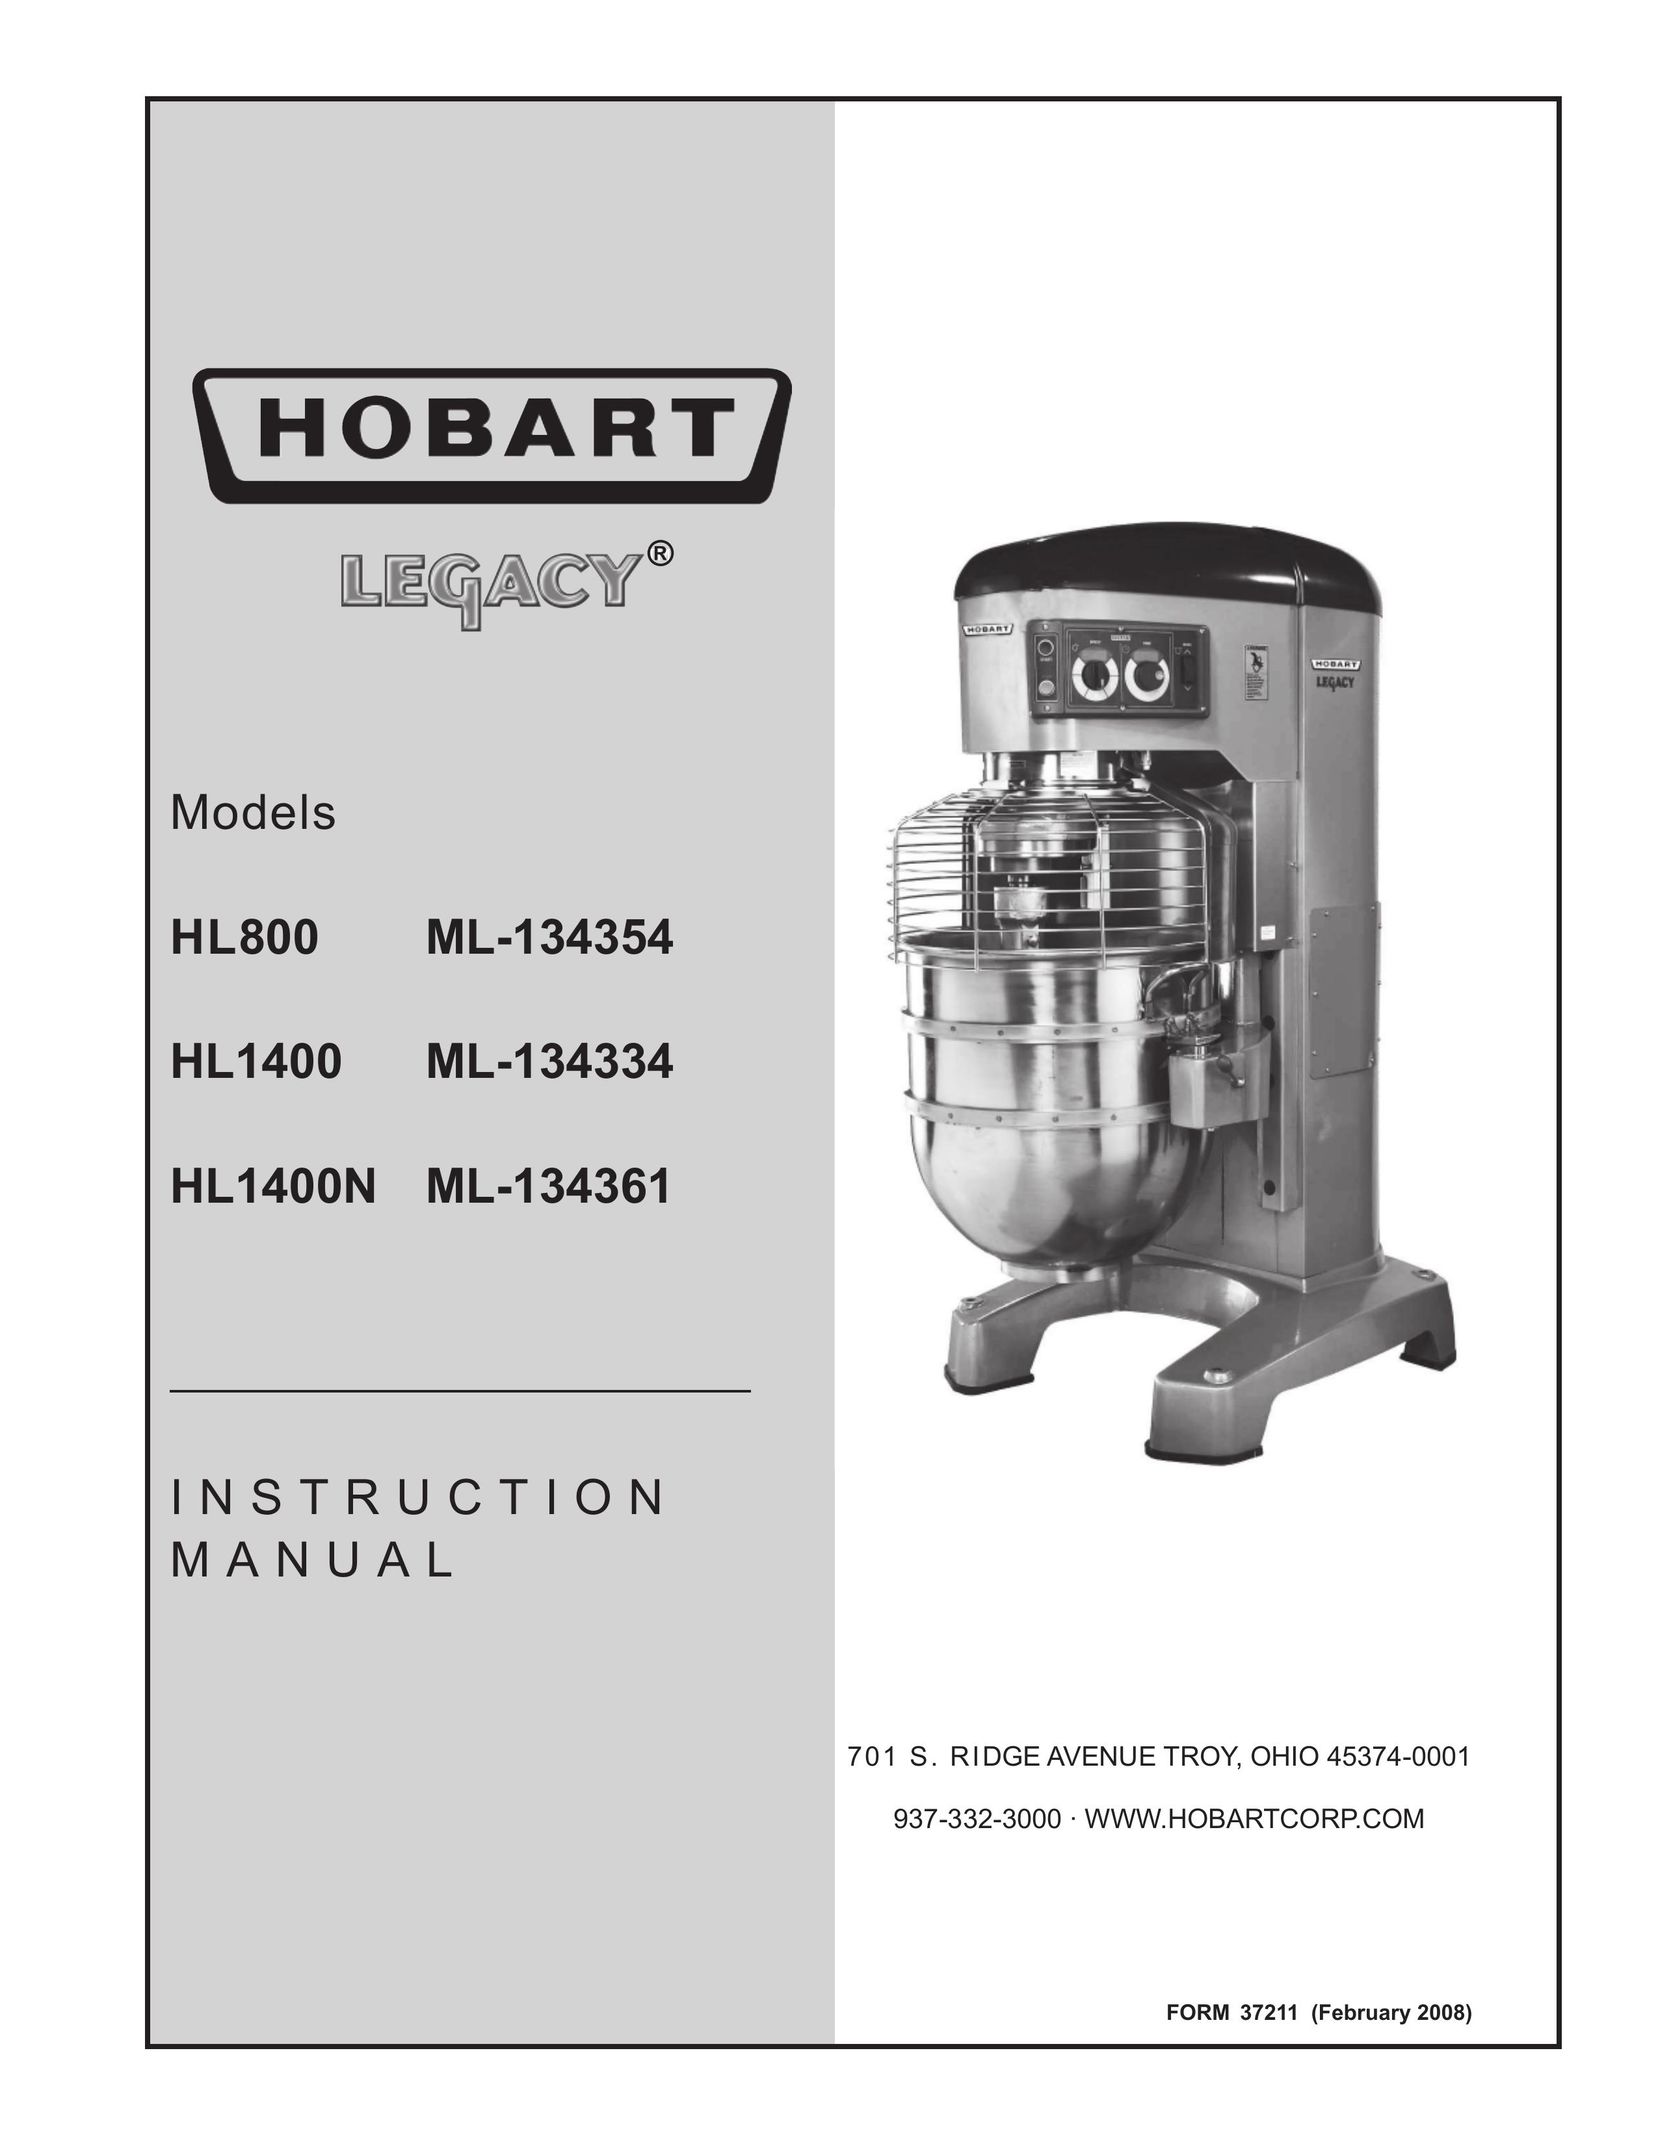 Hobart ML-134334 Mixer User Manual